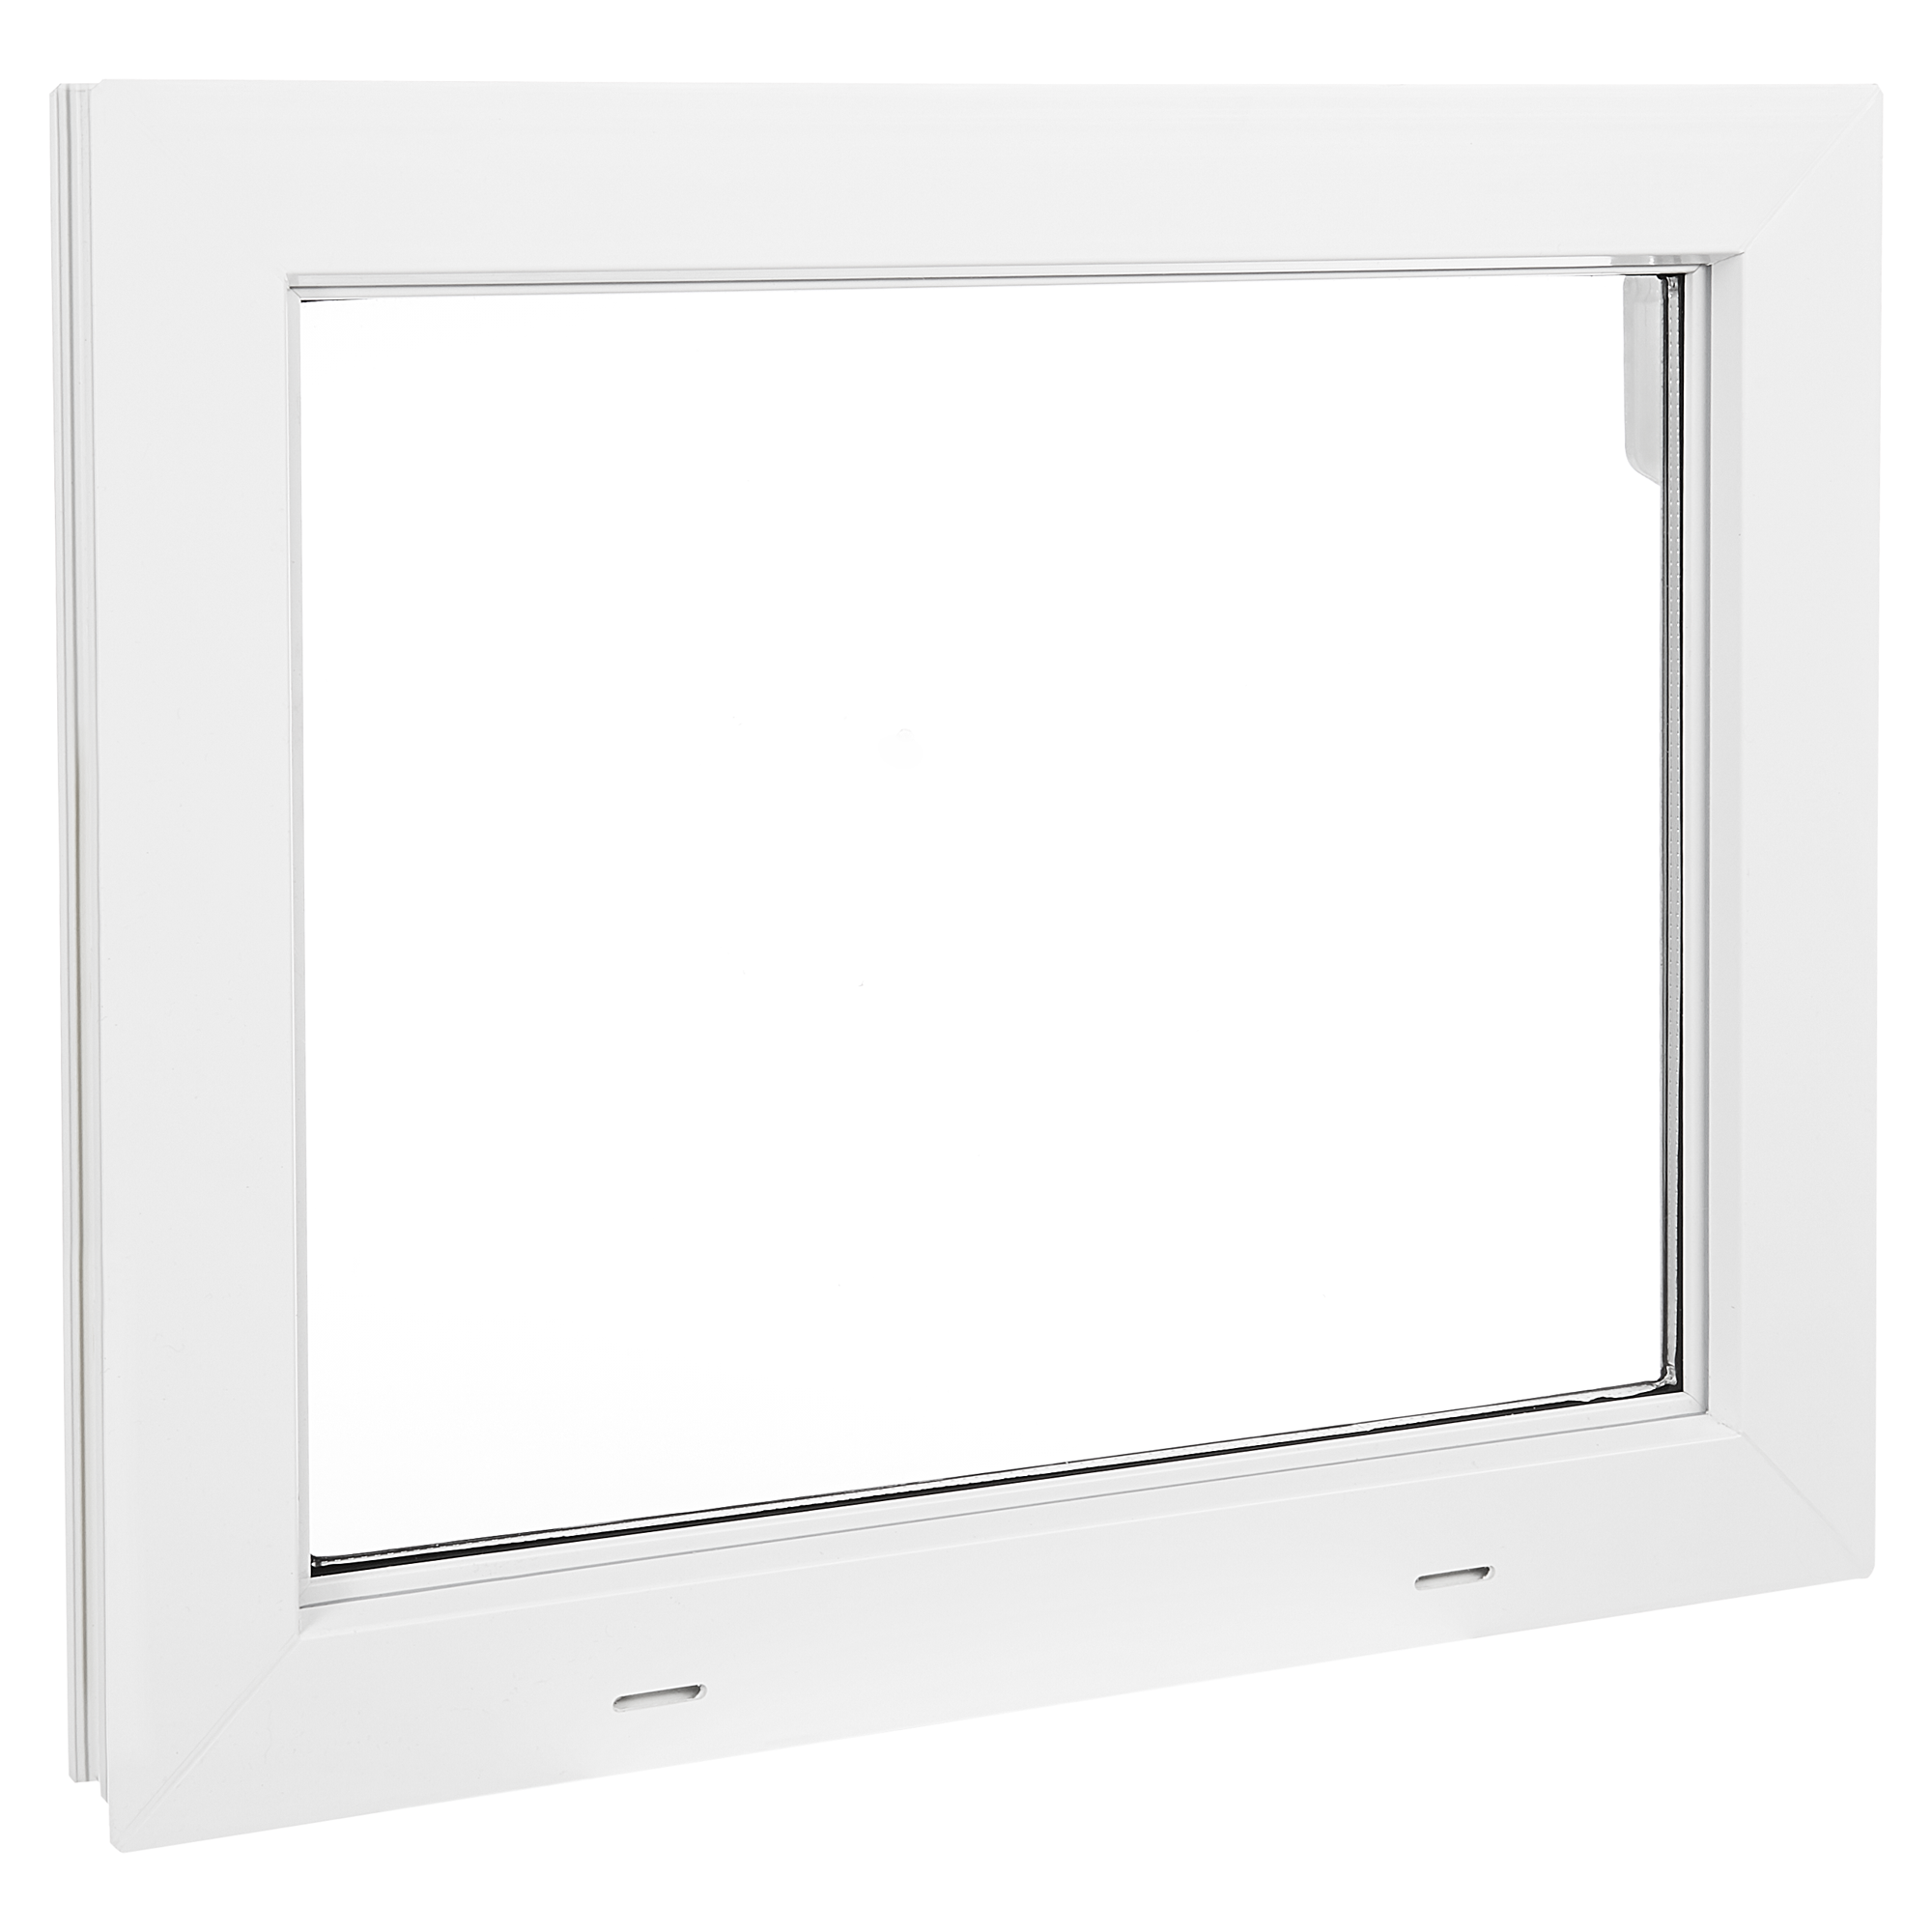 Kippfenster weiß 1-flügelig 50 x 50 cm + product picture